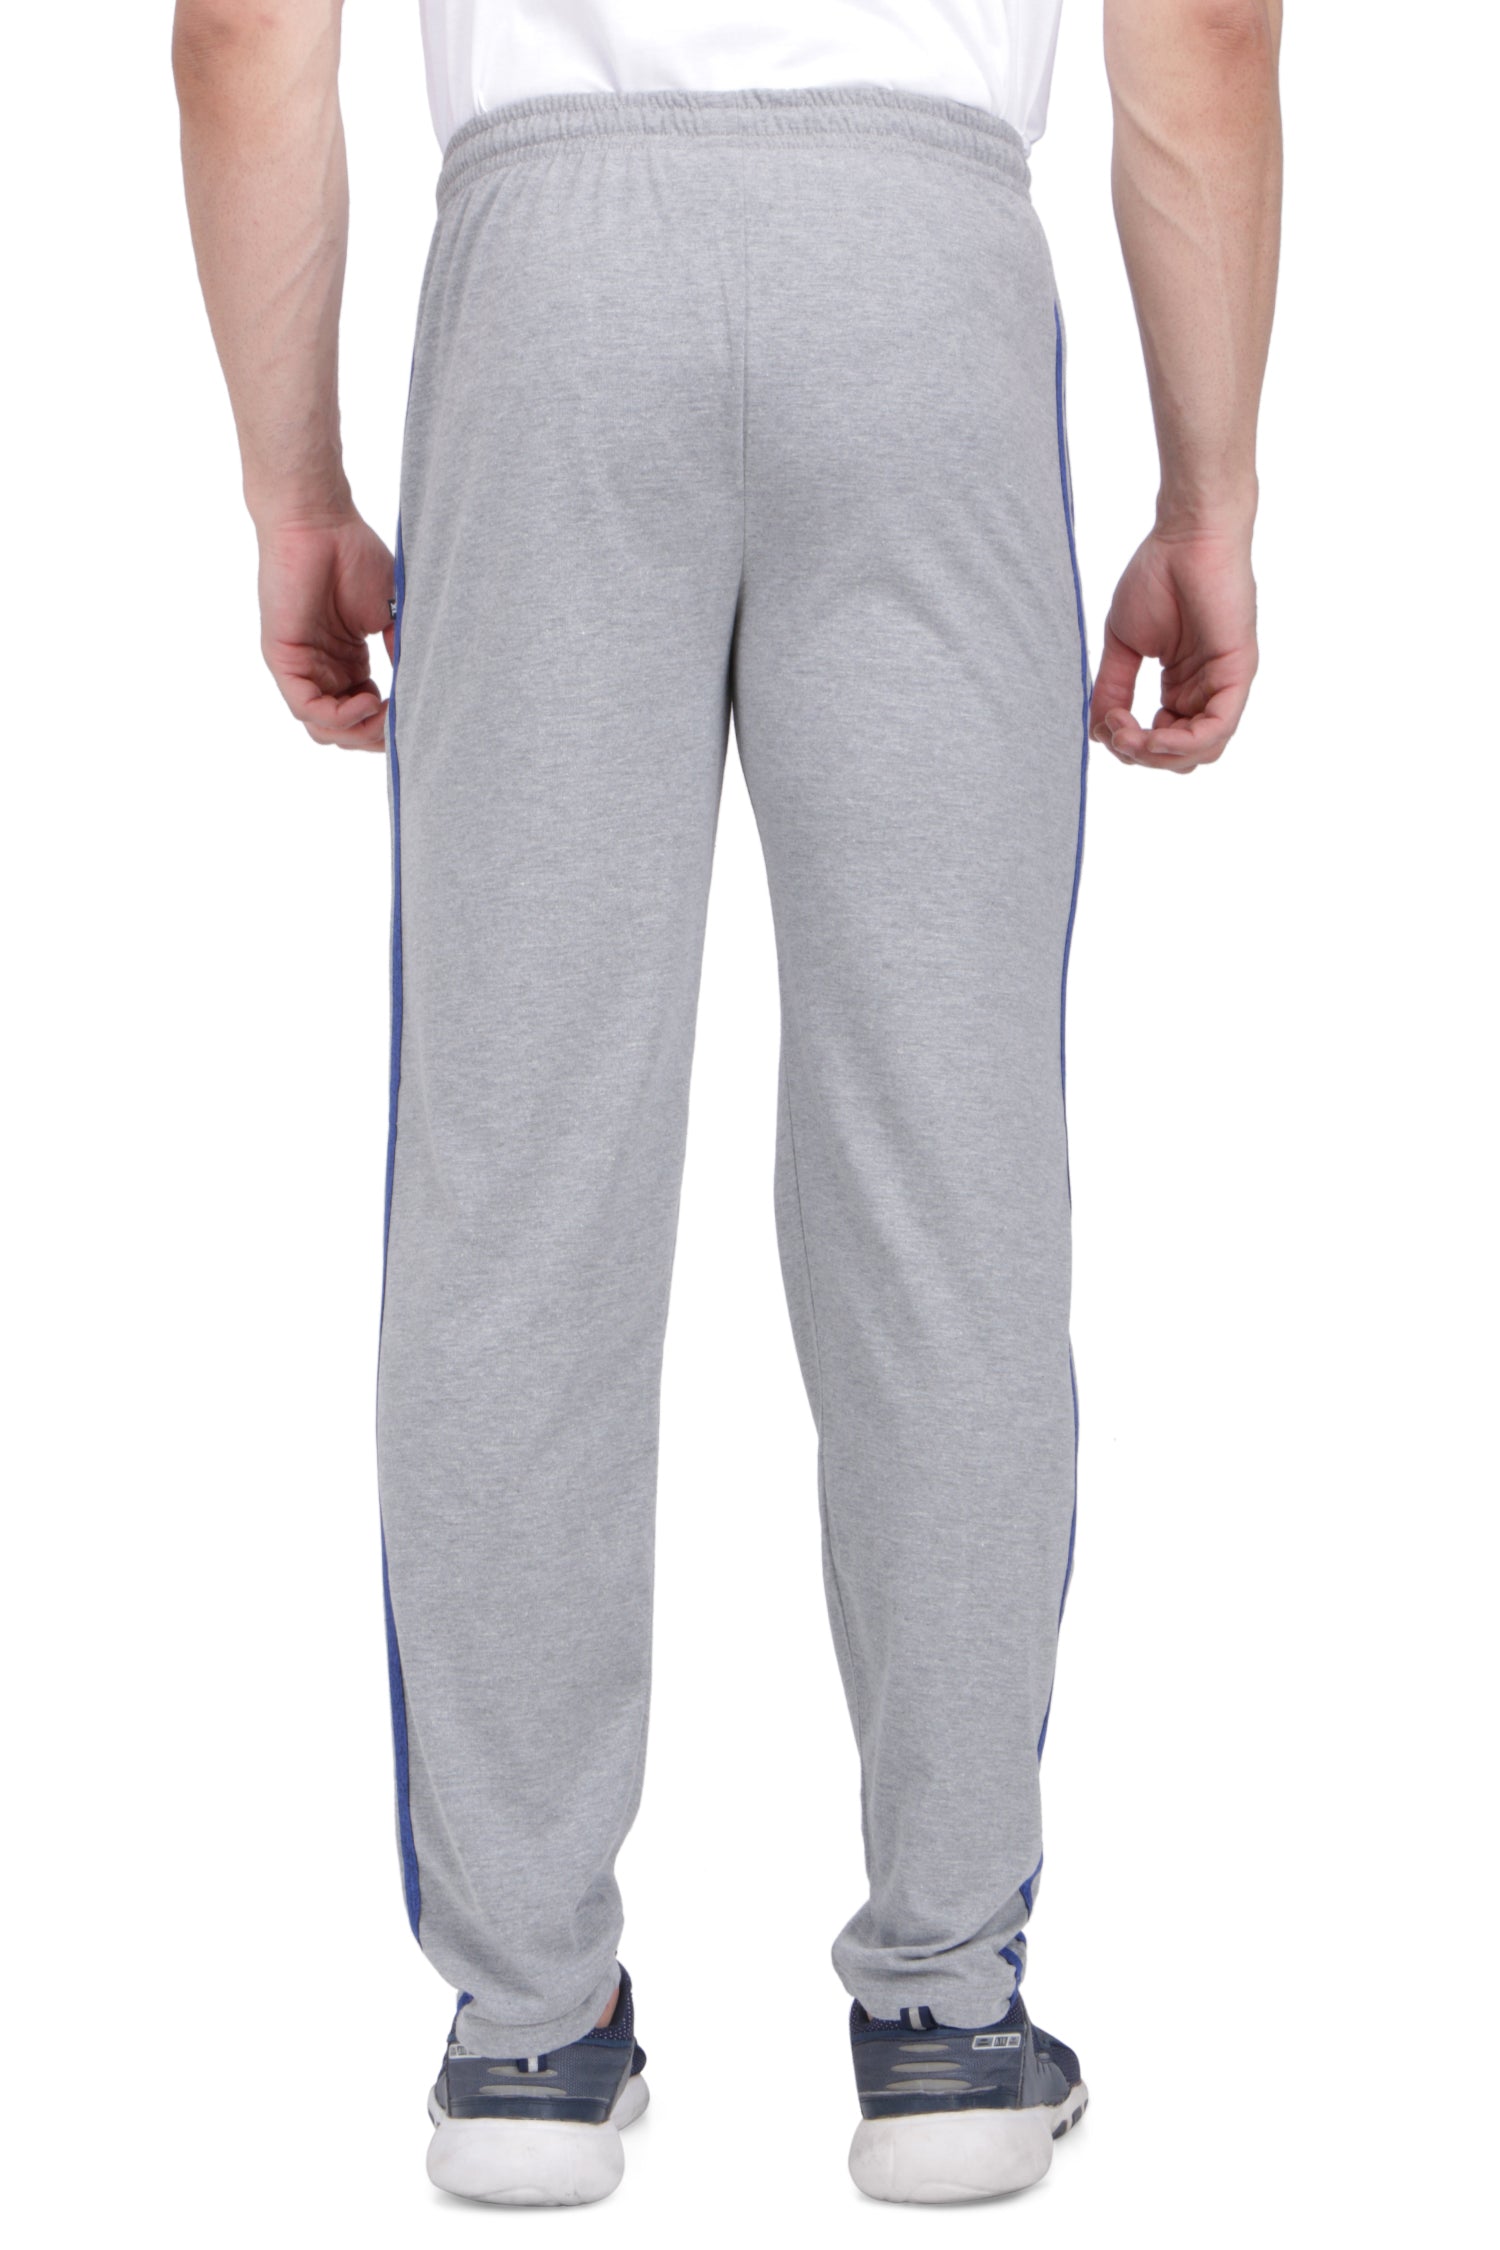 Veltick Solid Men Grey Track Pants - Buy Veltick Solid Men Grey Track Pants  Online at Best Prices in India | Flipkart.com